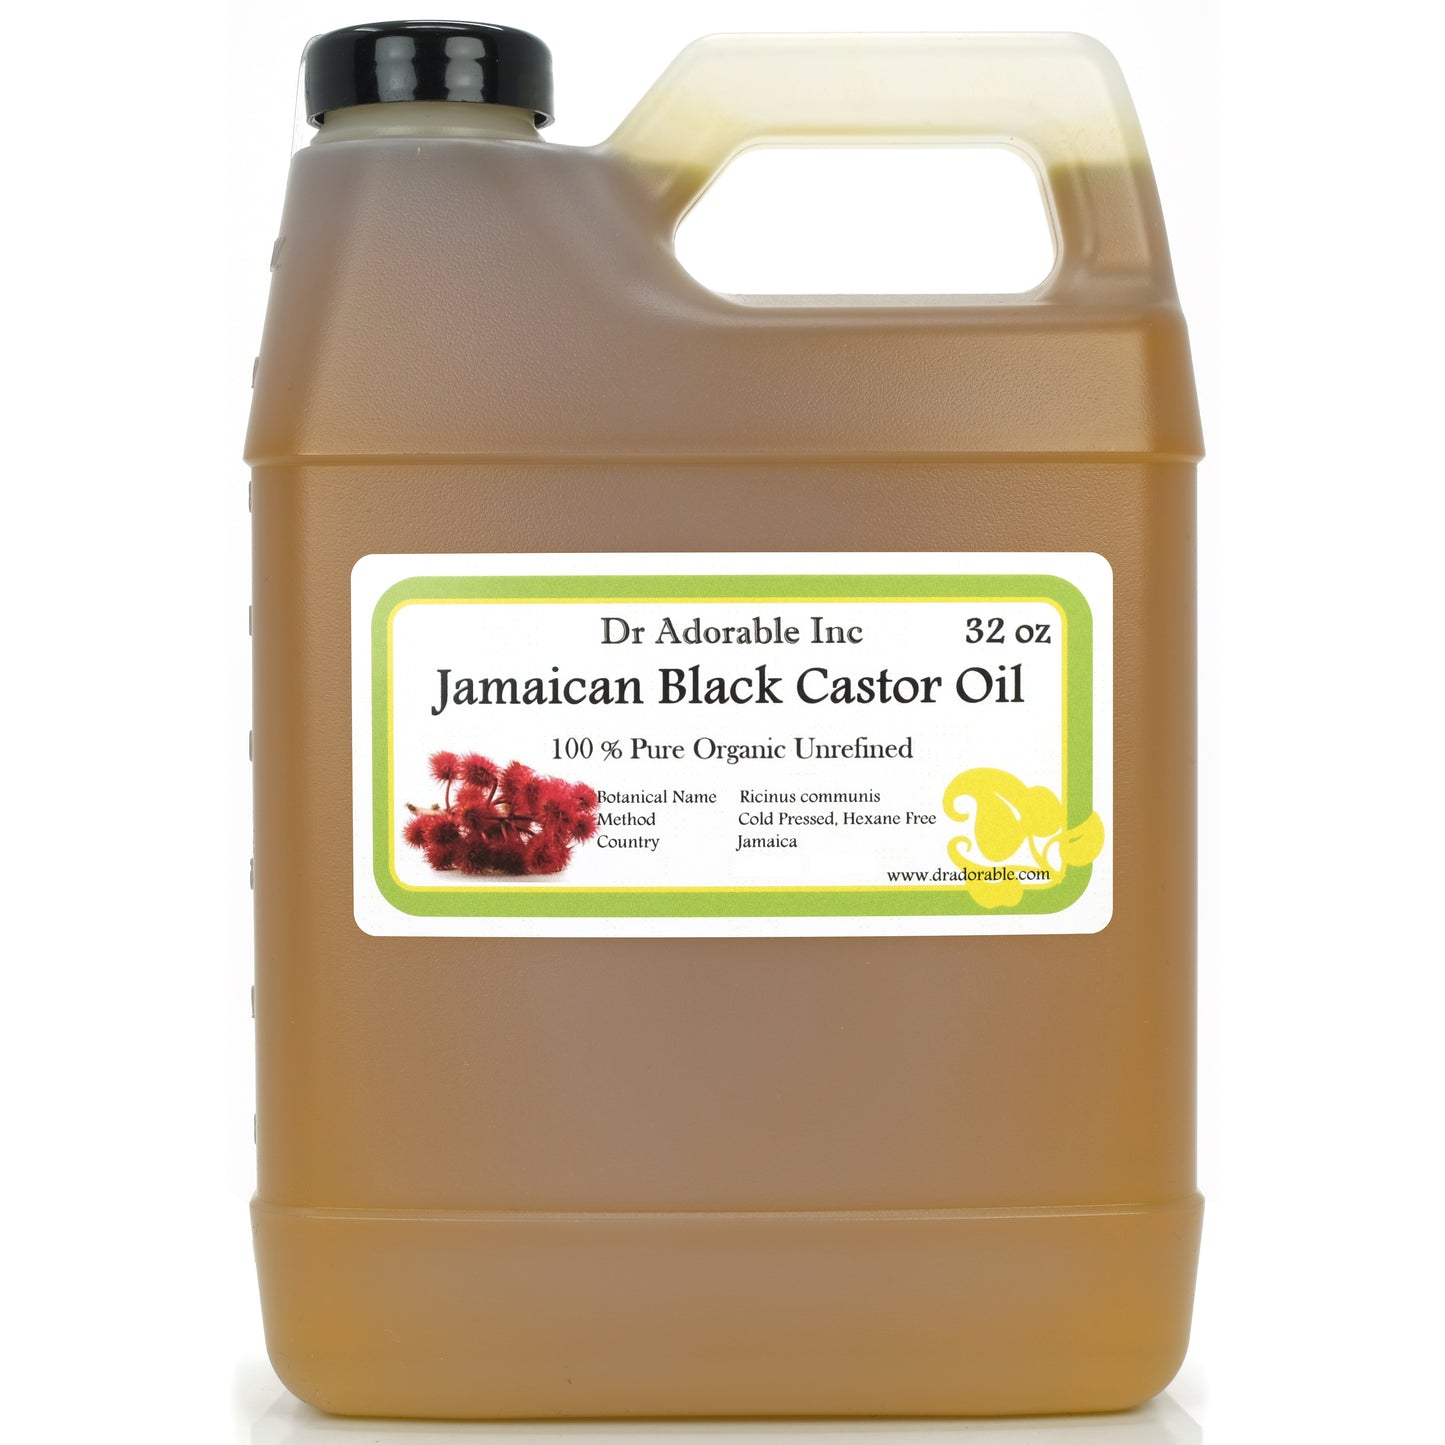 Jamaican Black Castor Oil - Pure Natural Organic Strengthen Grow & Restore Hair Care